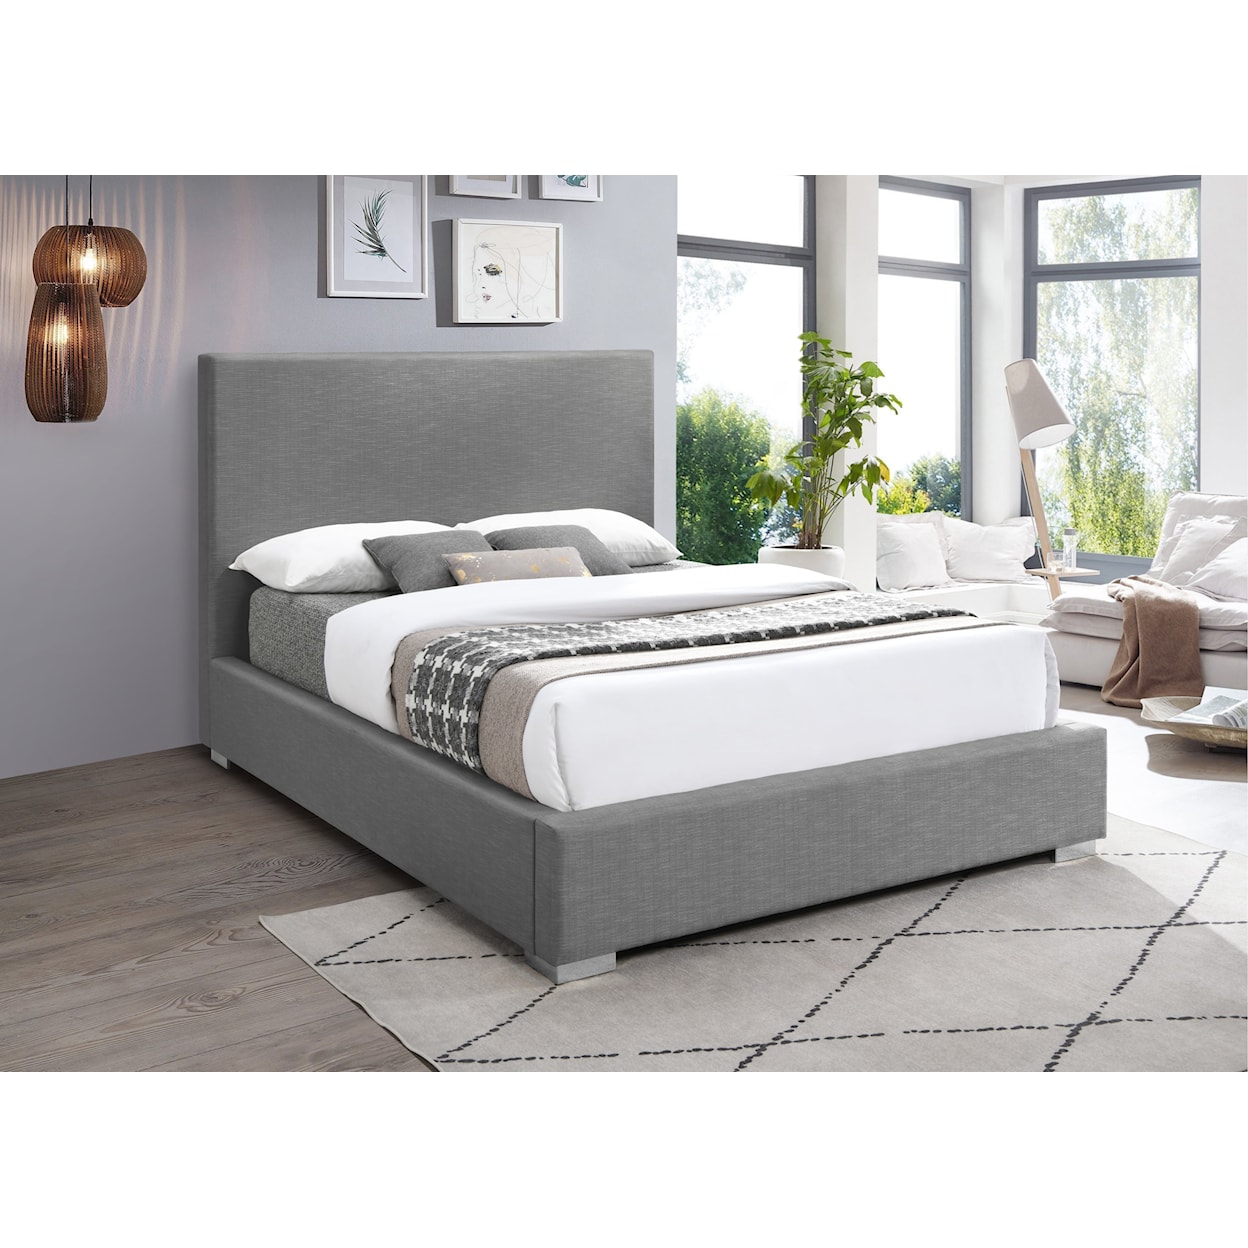 Meridian Furniture Crosby Full Bed